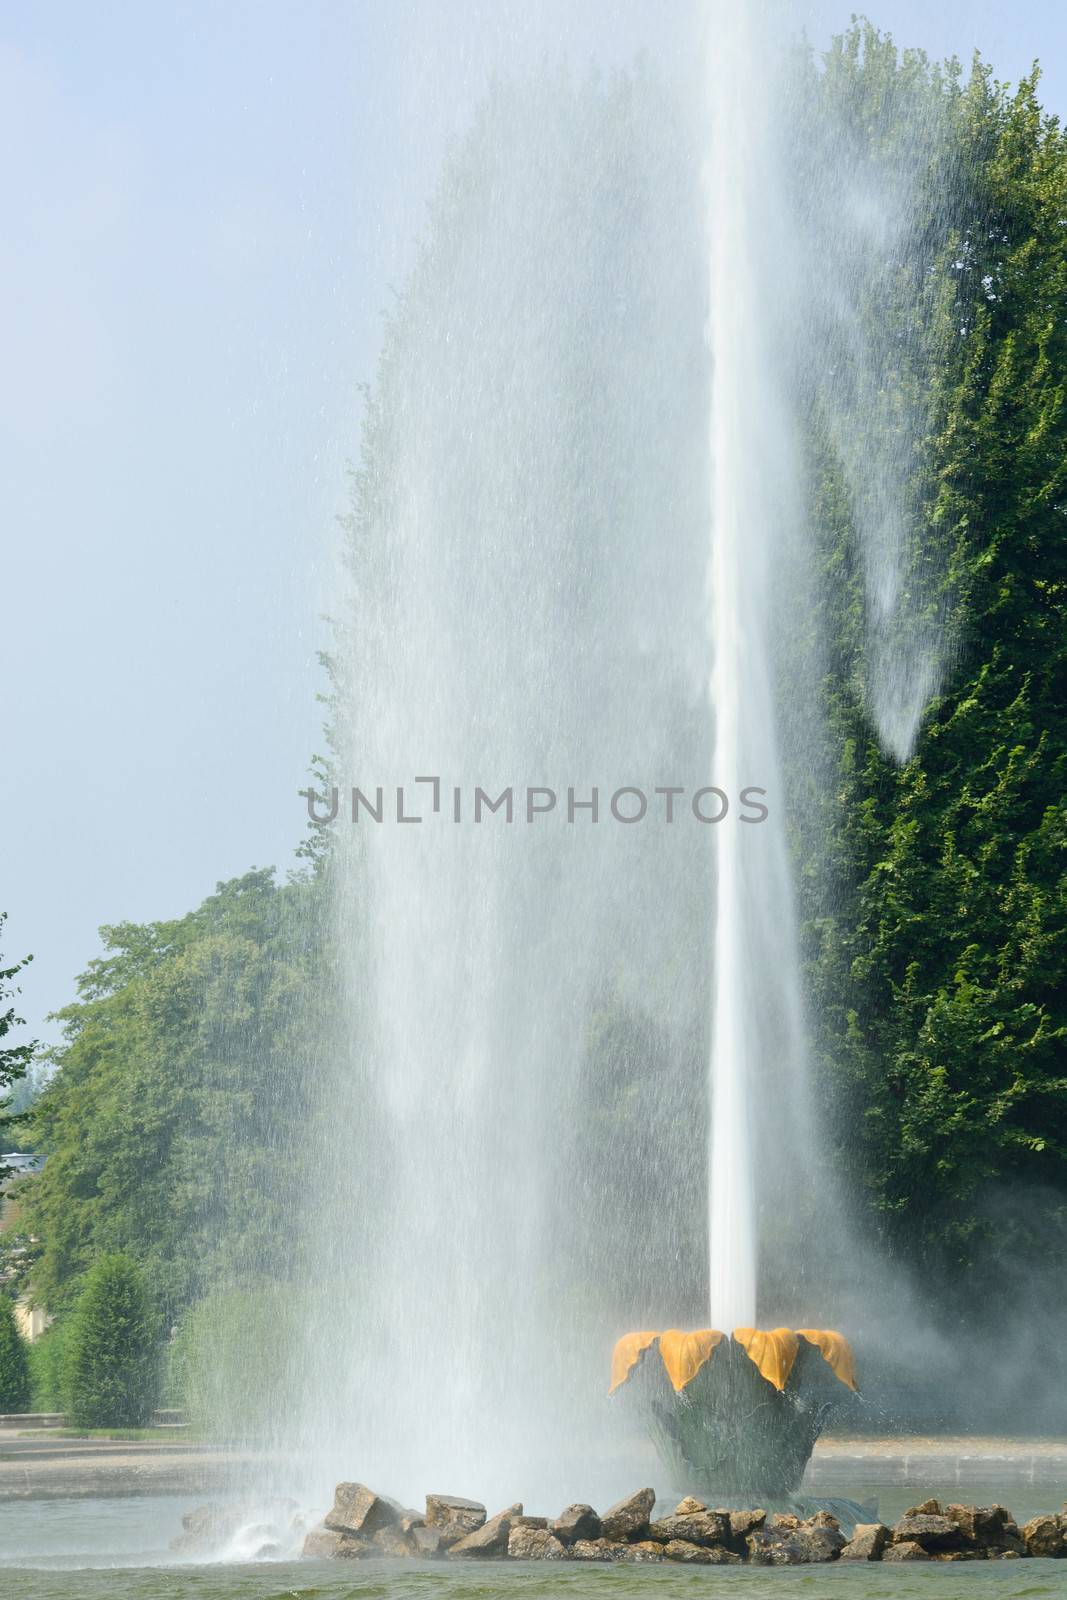 The great fountain in Herrenhausen Gardens, Hannover, Germany by velislava